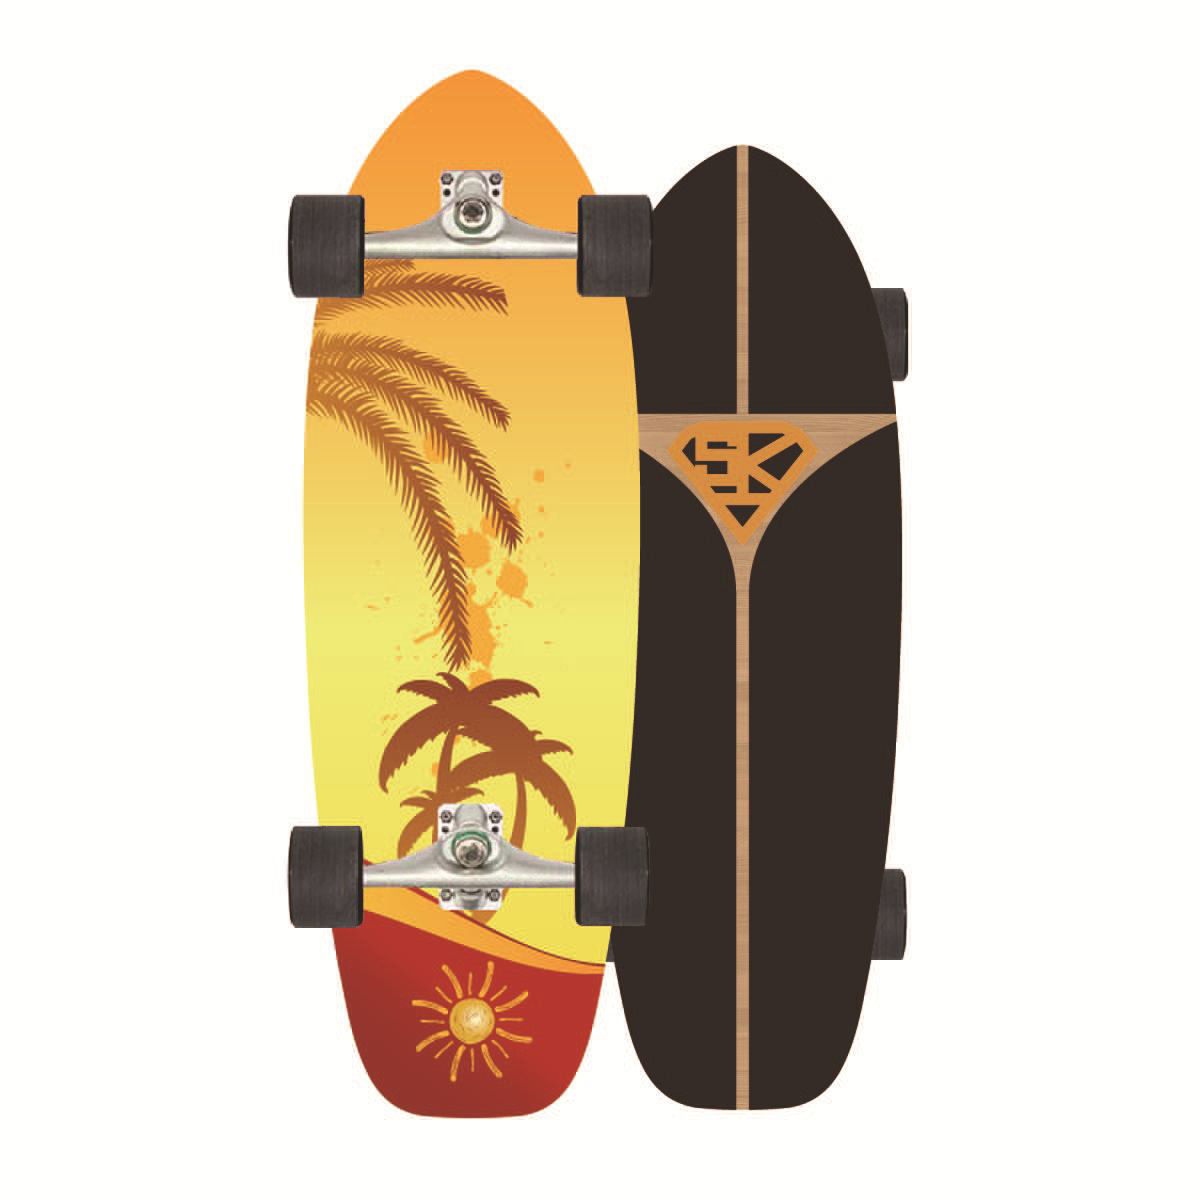 Asile SurfSkate เซิร์ฟเสก็ต CX4 สเก็ตบอร์ด Surf skateboard สามารถเลี้ยวซ้ายและขวา ส่งจาก กทม